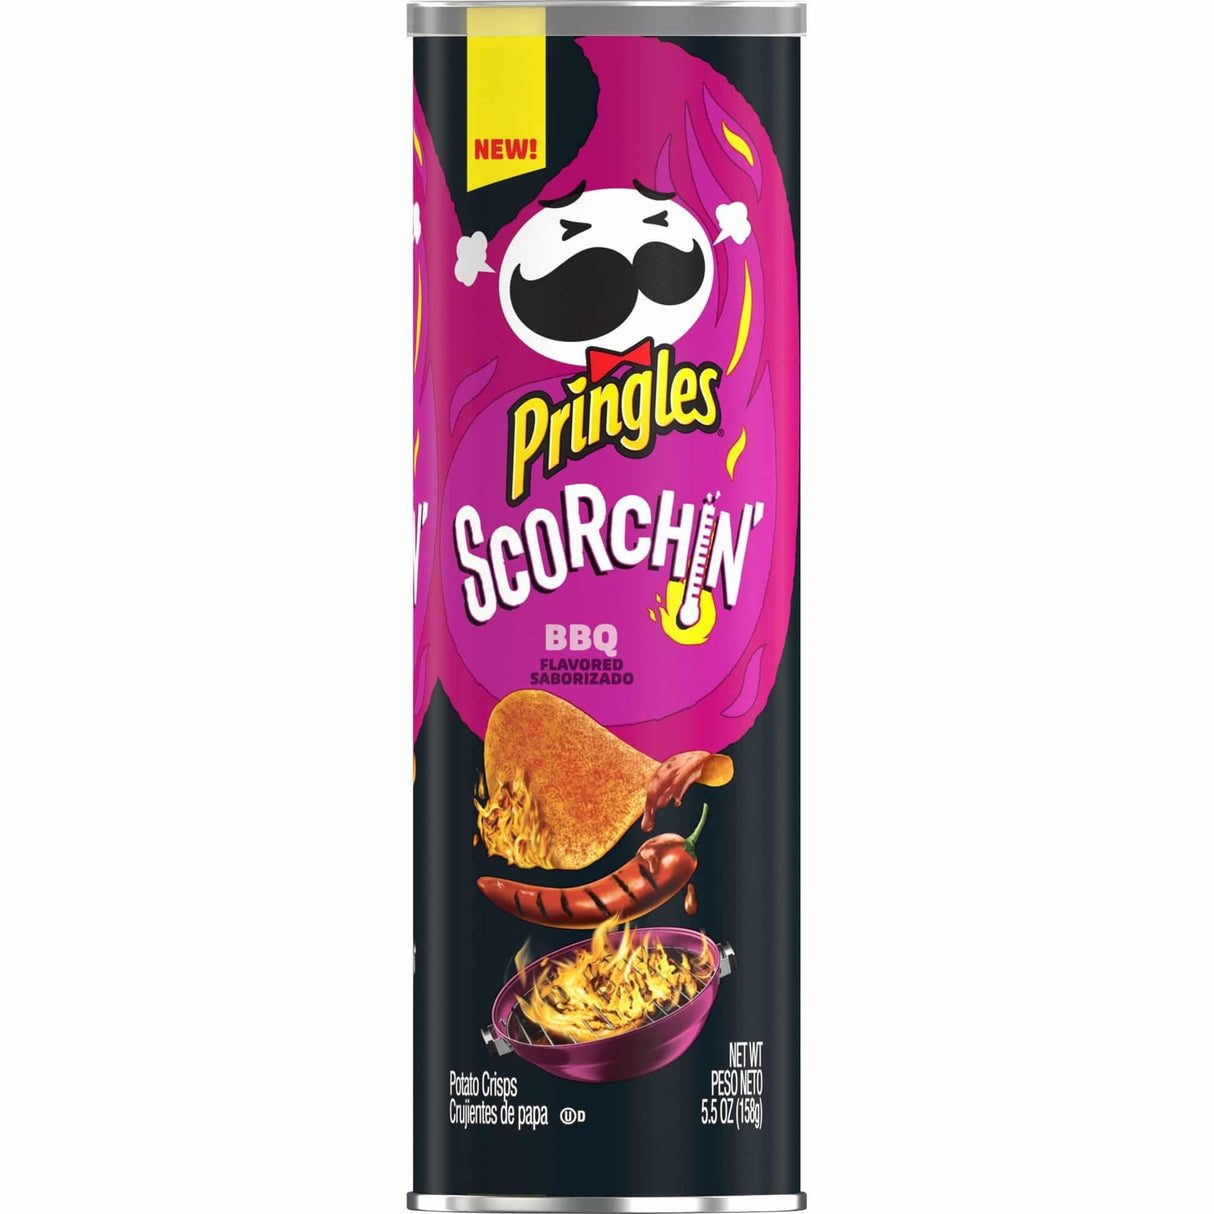 Pringles Scorchin' BBQ (156g)